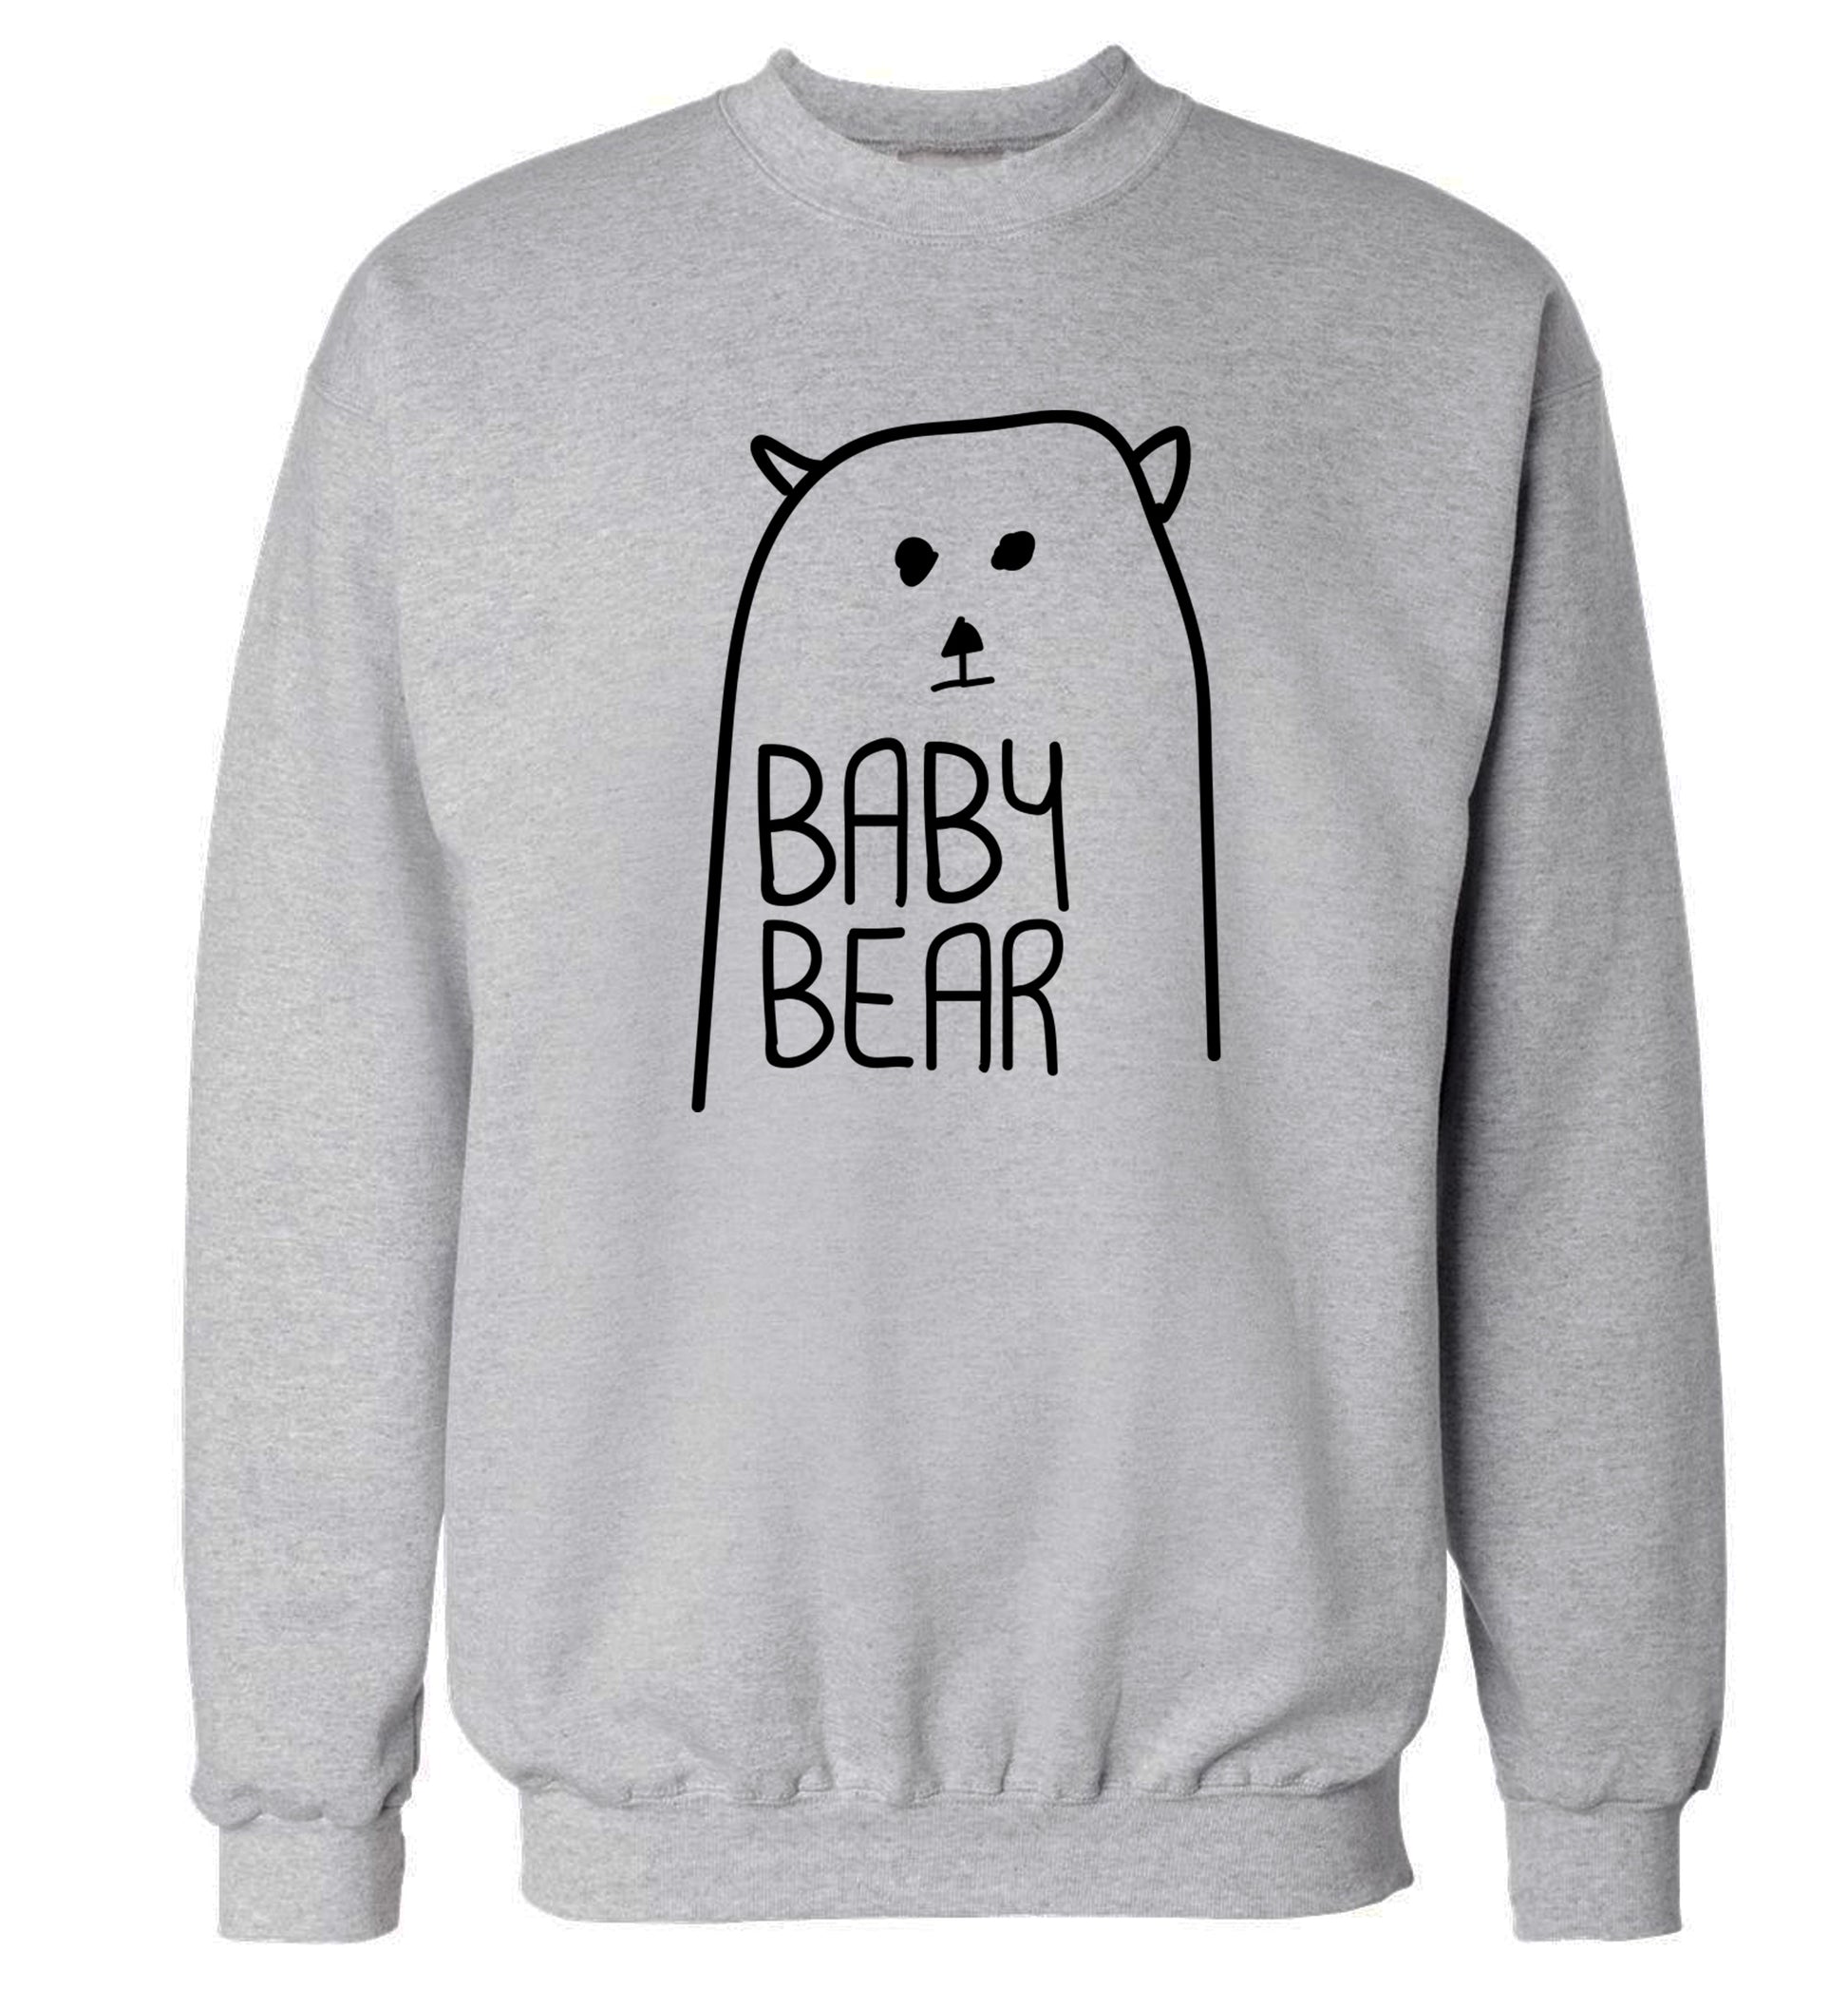 Baby bear Adult's unisex grey Sweater 2XL